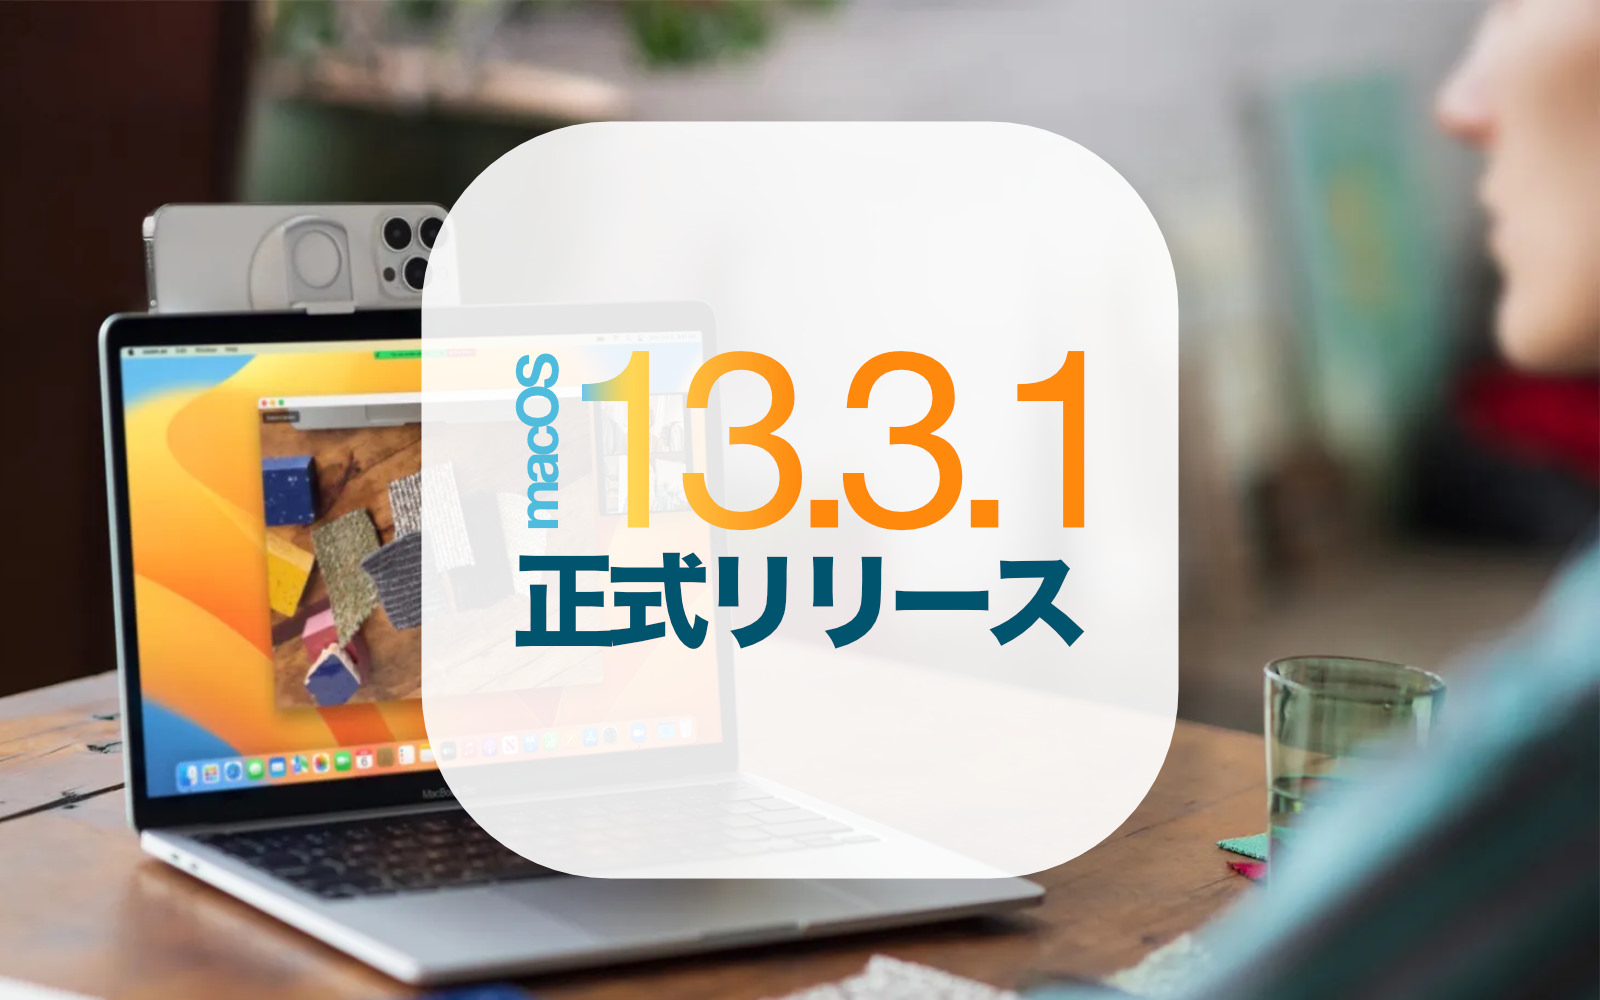 MacOS13 3 1 Ventura official release